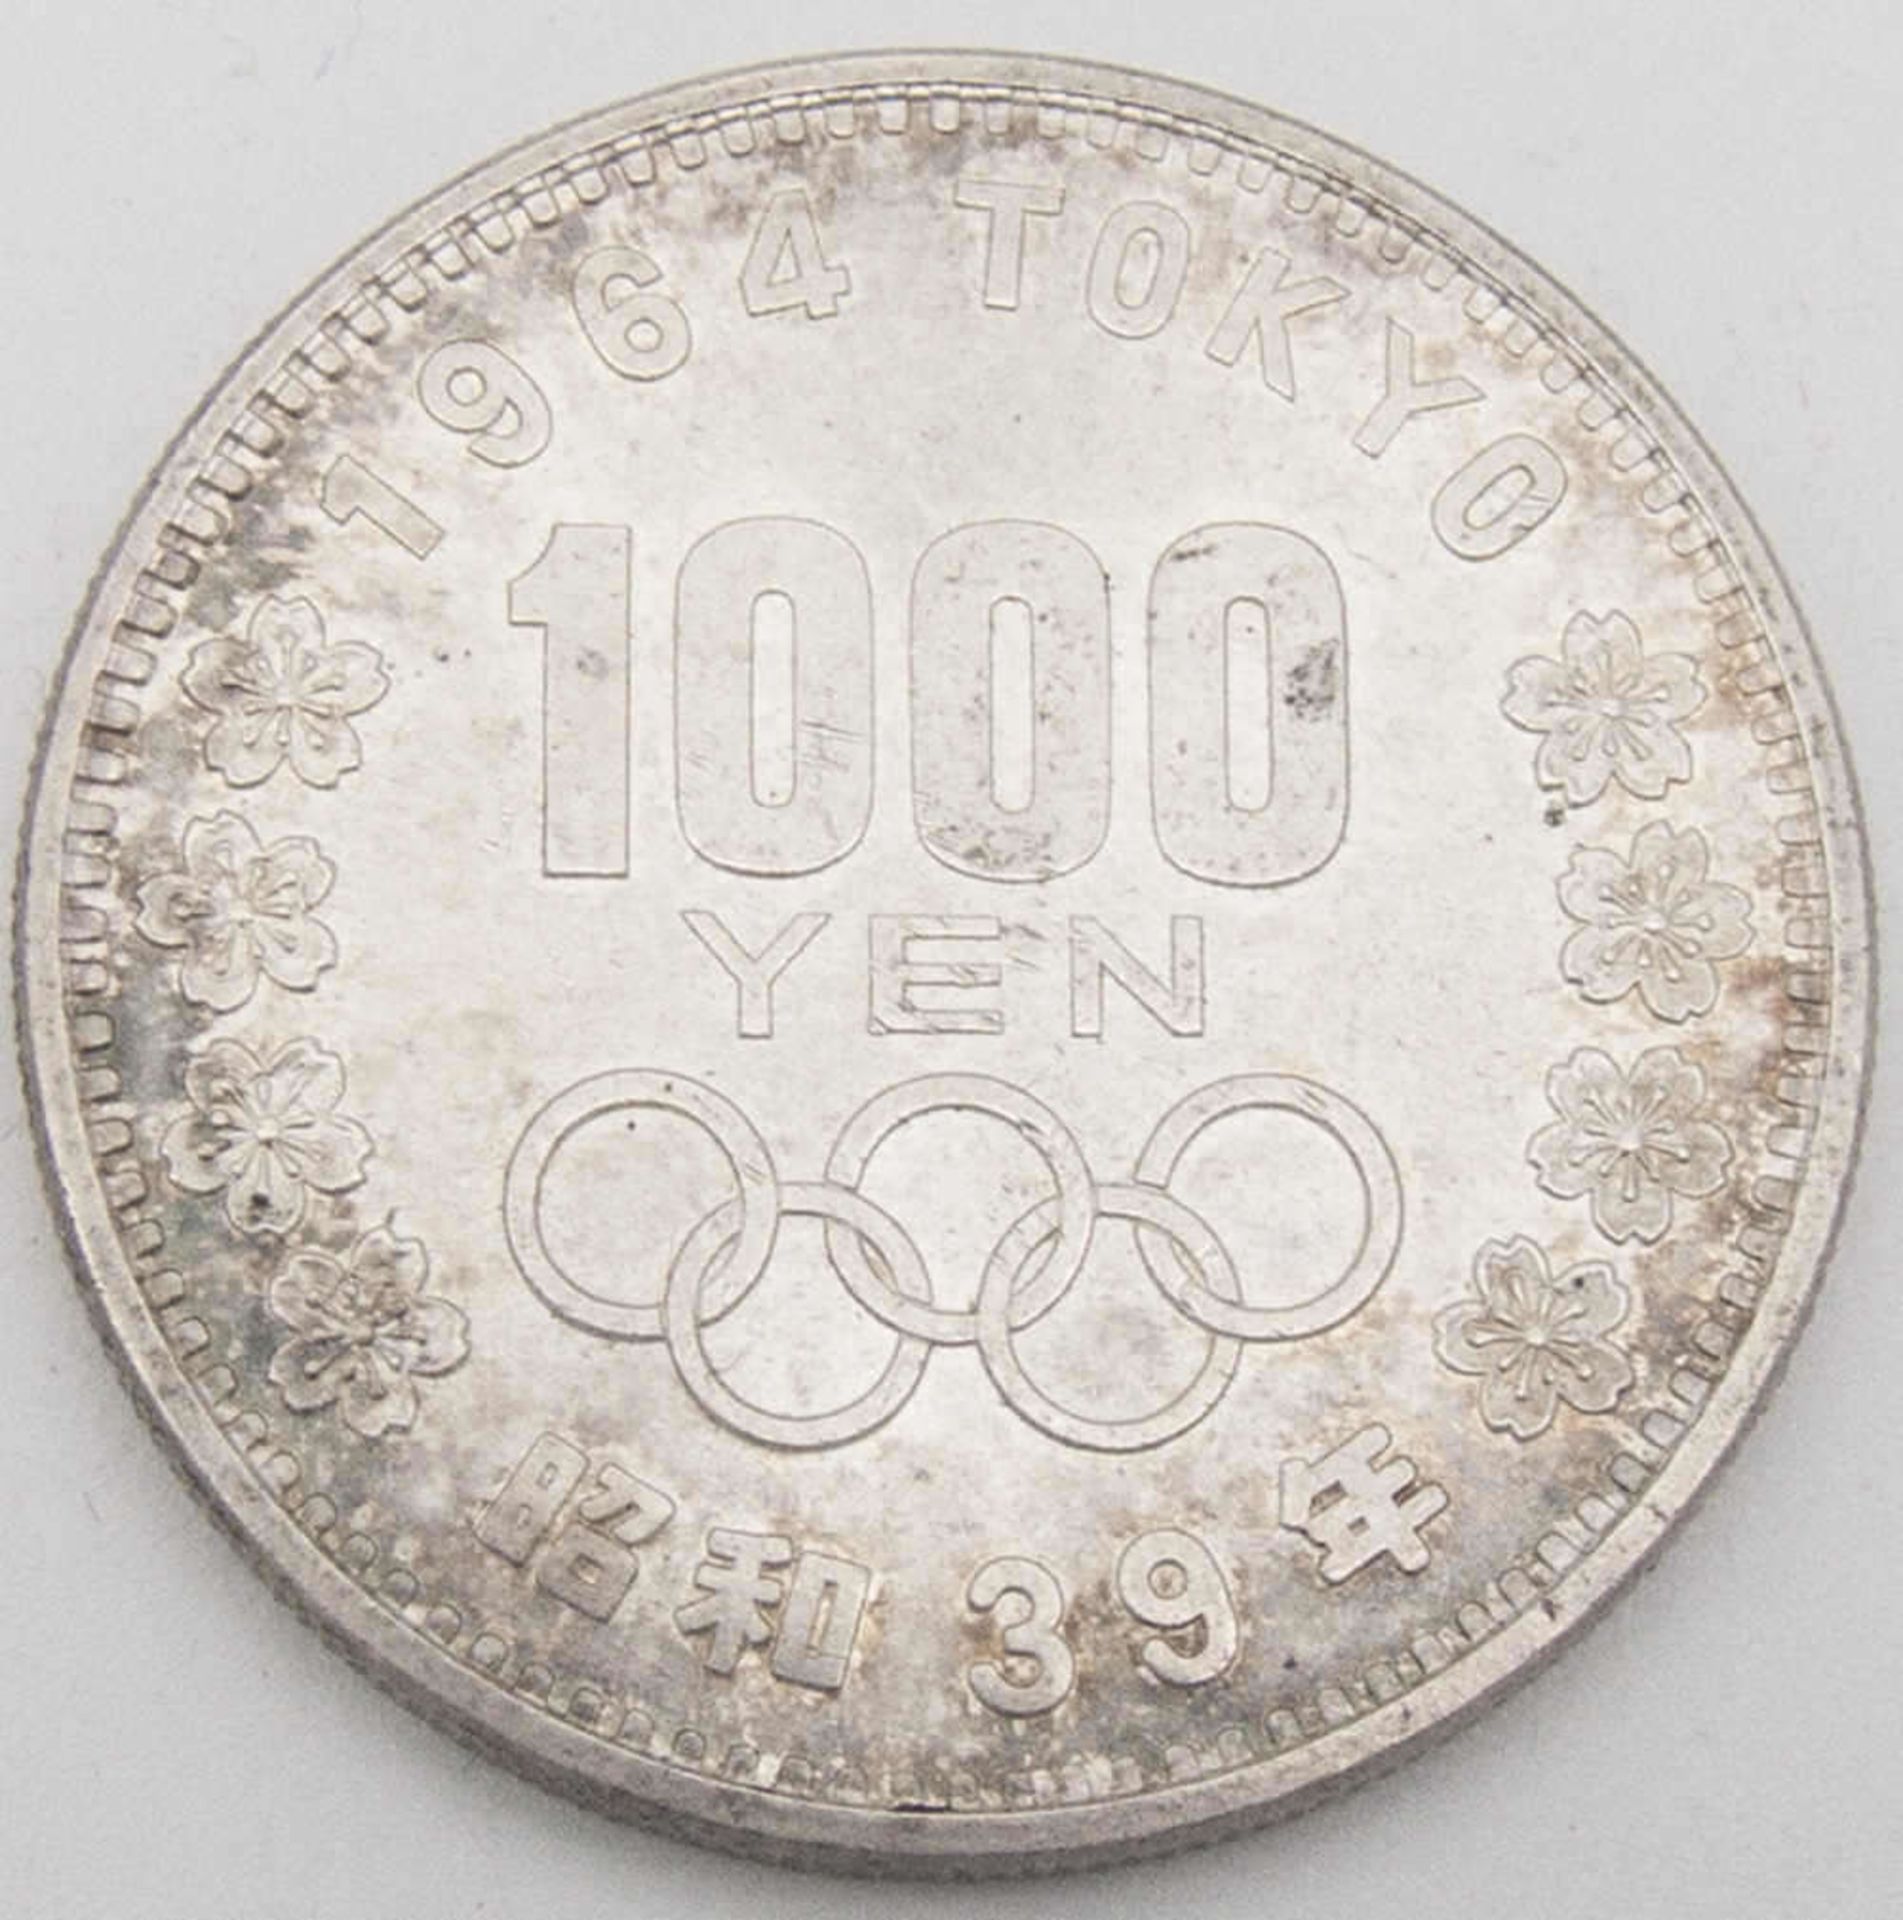 Japan 1964, 1000 Yen - Silbermünze. Erhaltung: vz.Japan 1964, 1000 yen - silver coin. Condition: